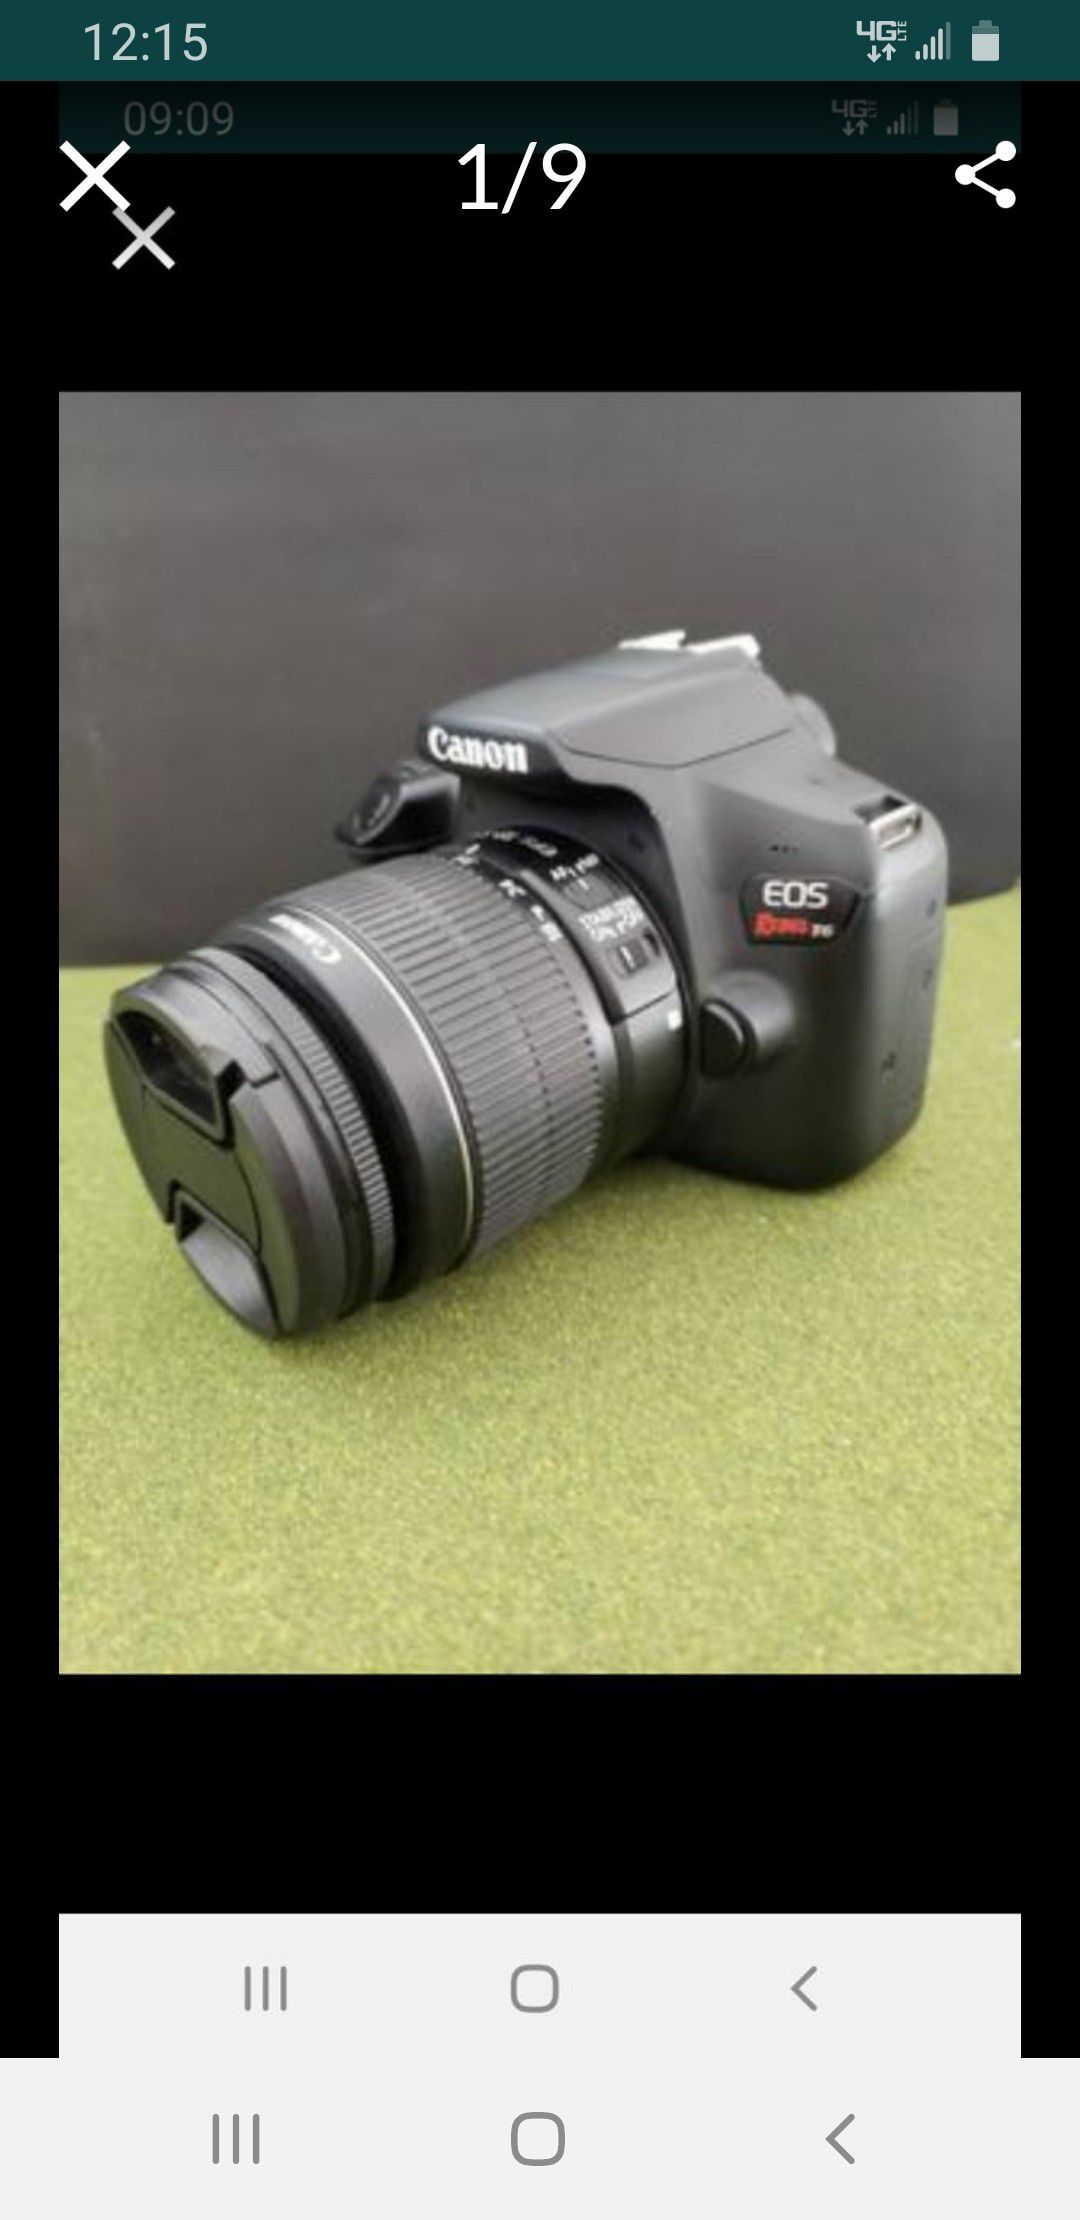 EOS T6 Canon Camera Bundle, 24 MP, WiFi, Video, Vivitar Lenses, Filters, Protective Bag